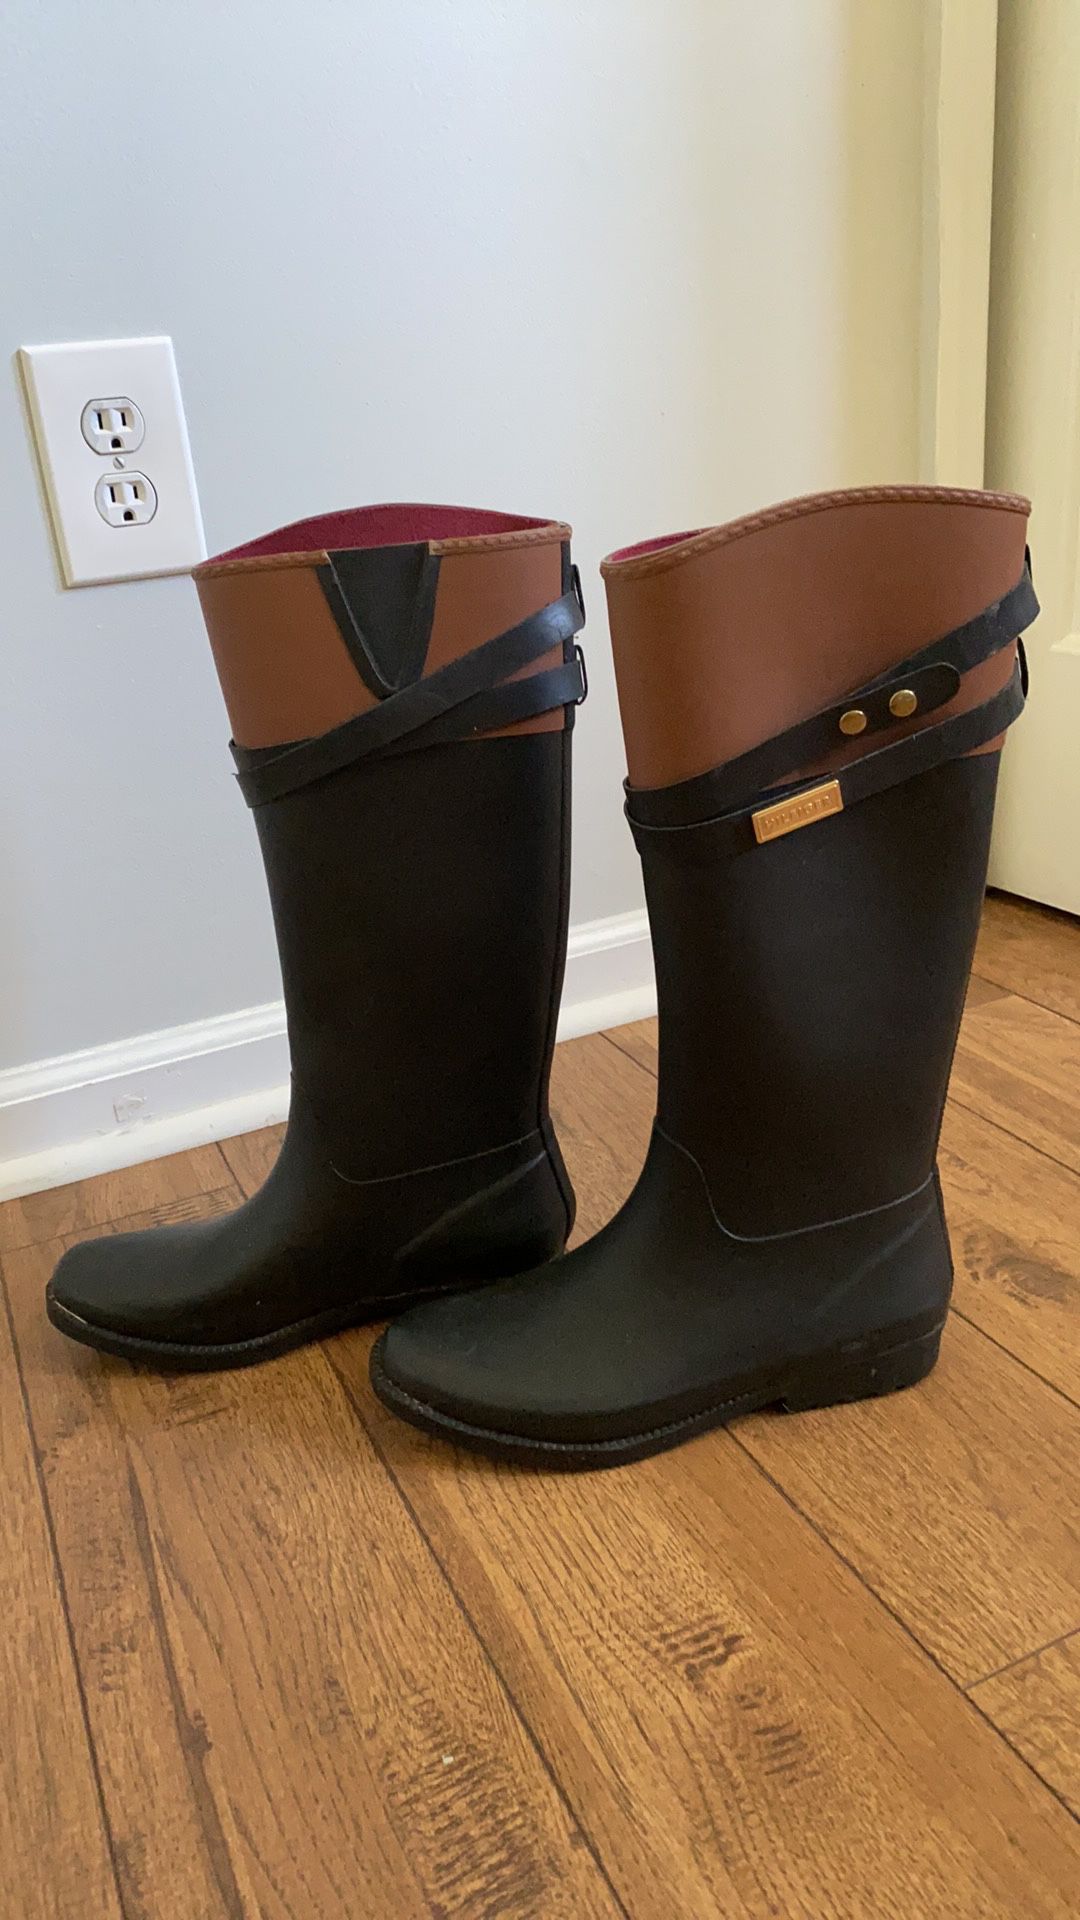 Tommy Hilfiger rain boots size 8